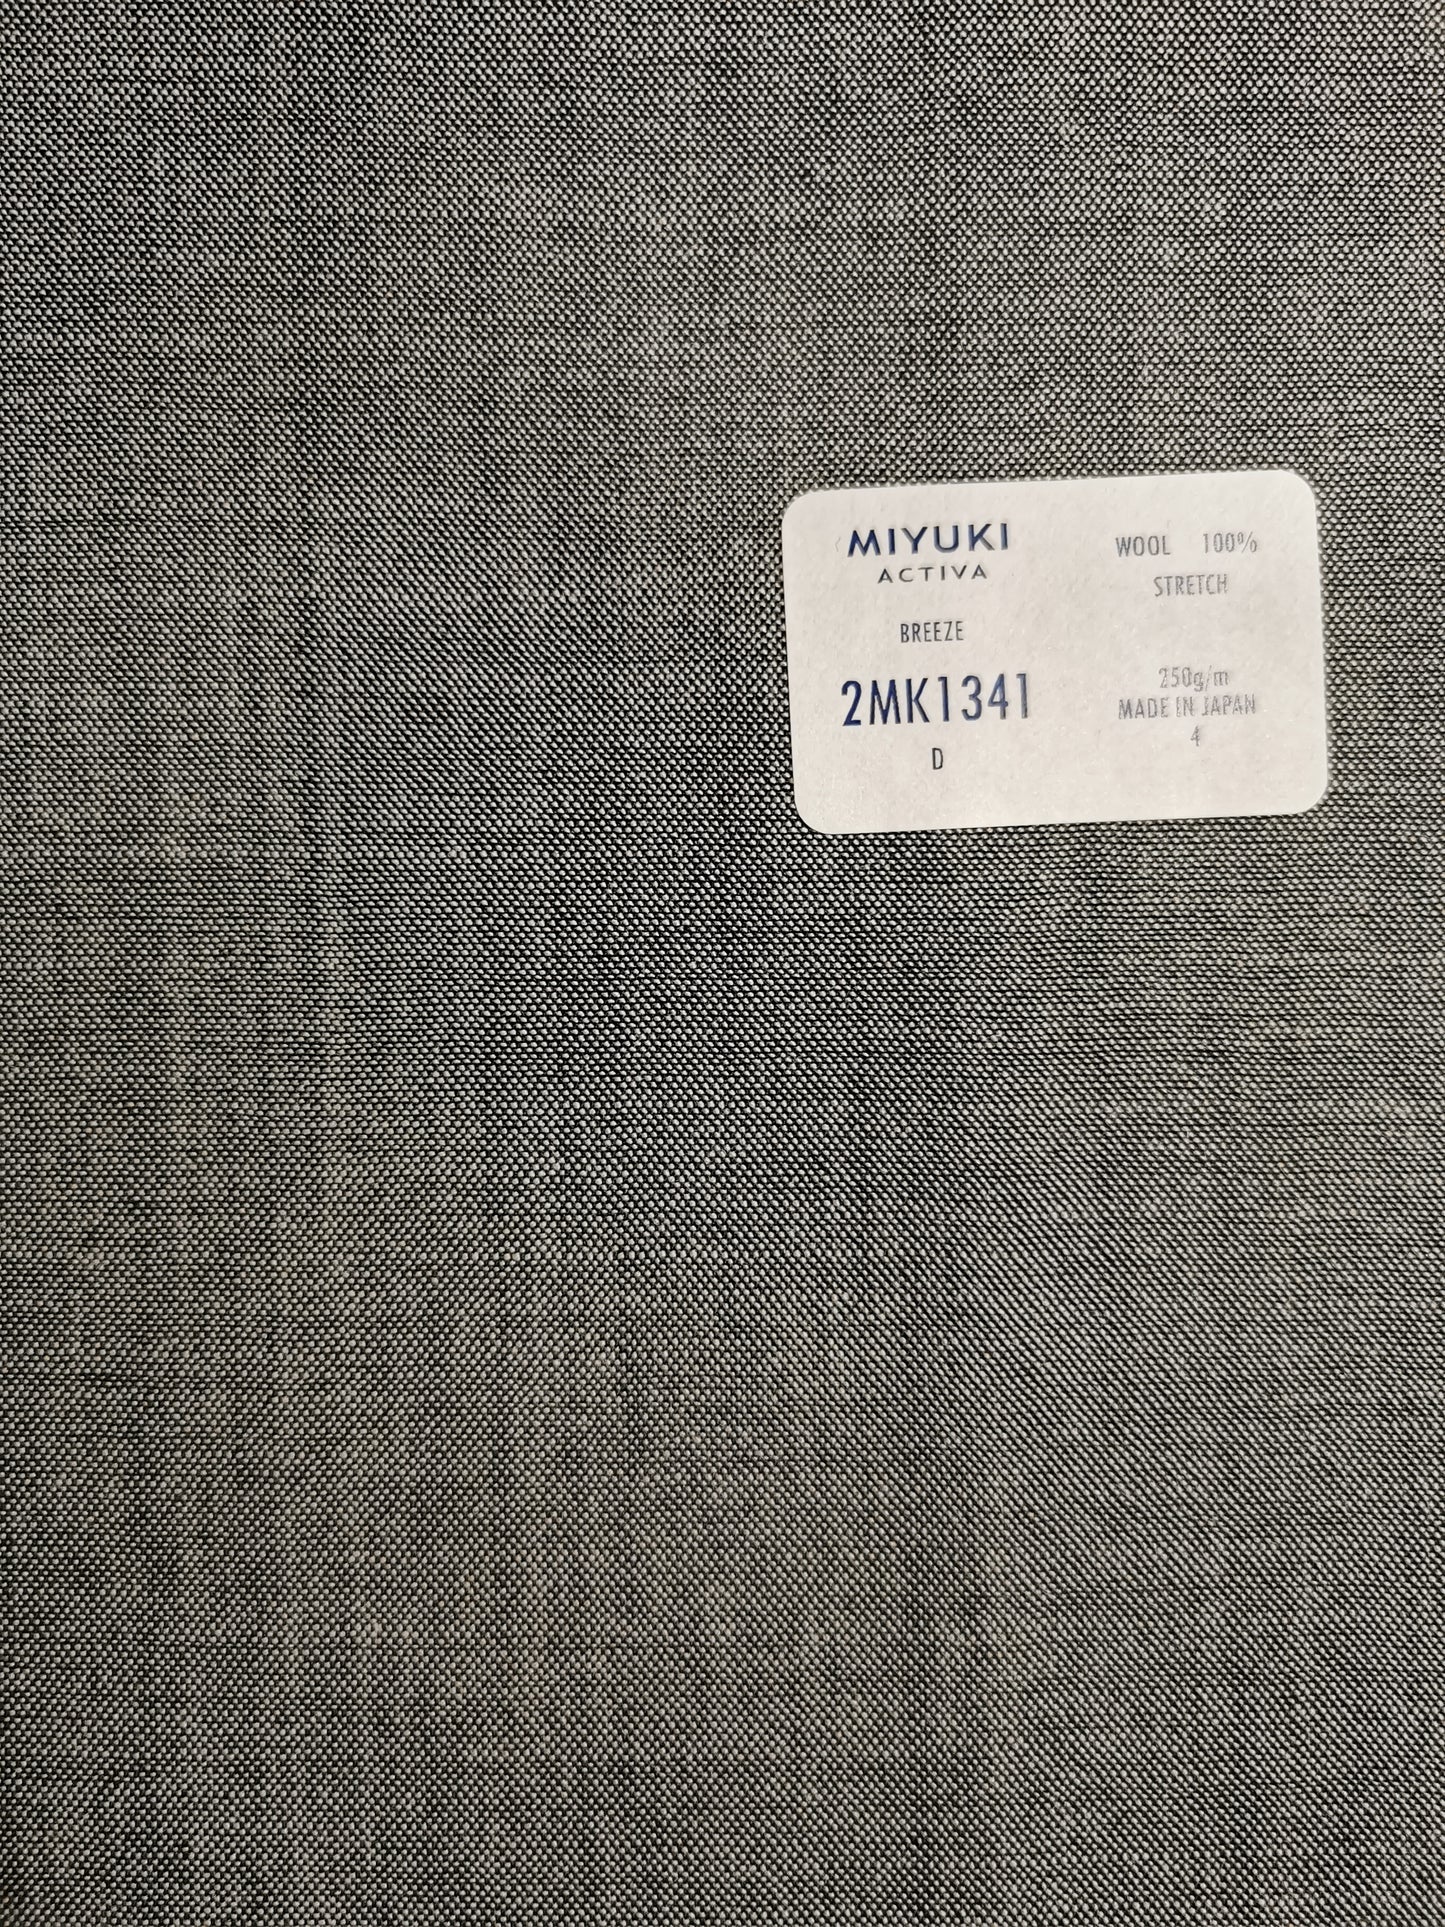 Brand : MIYUKI Textile ID : 2MK1341